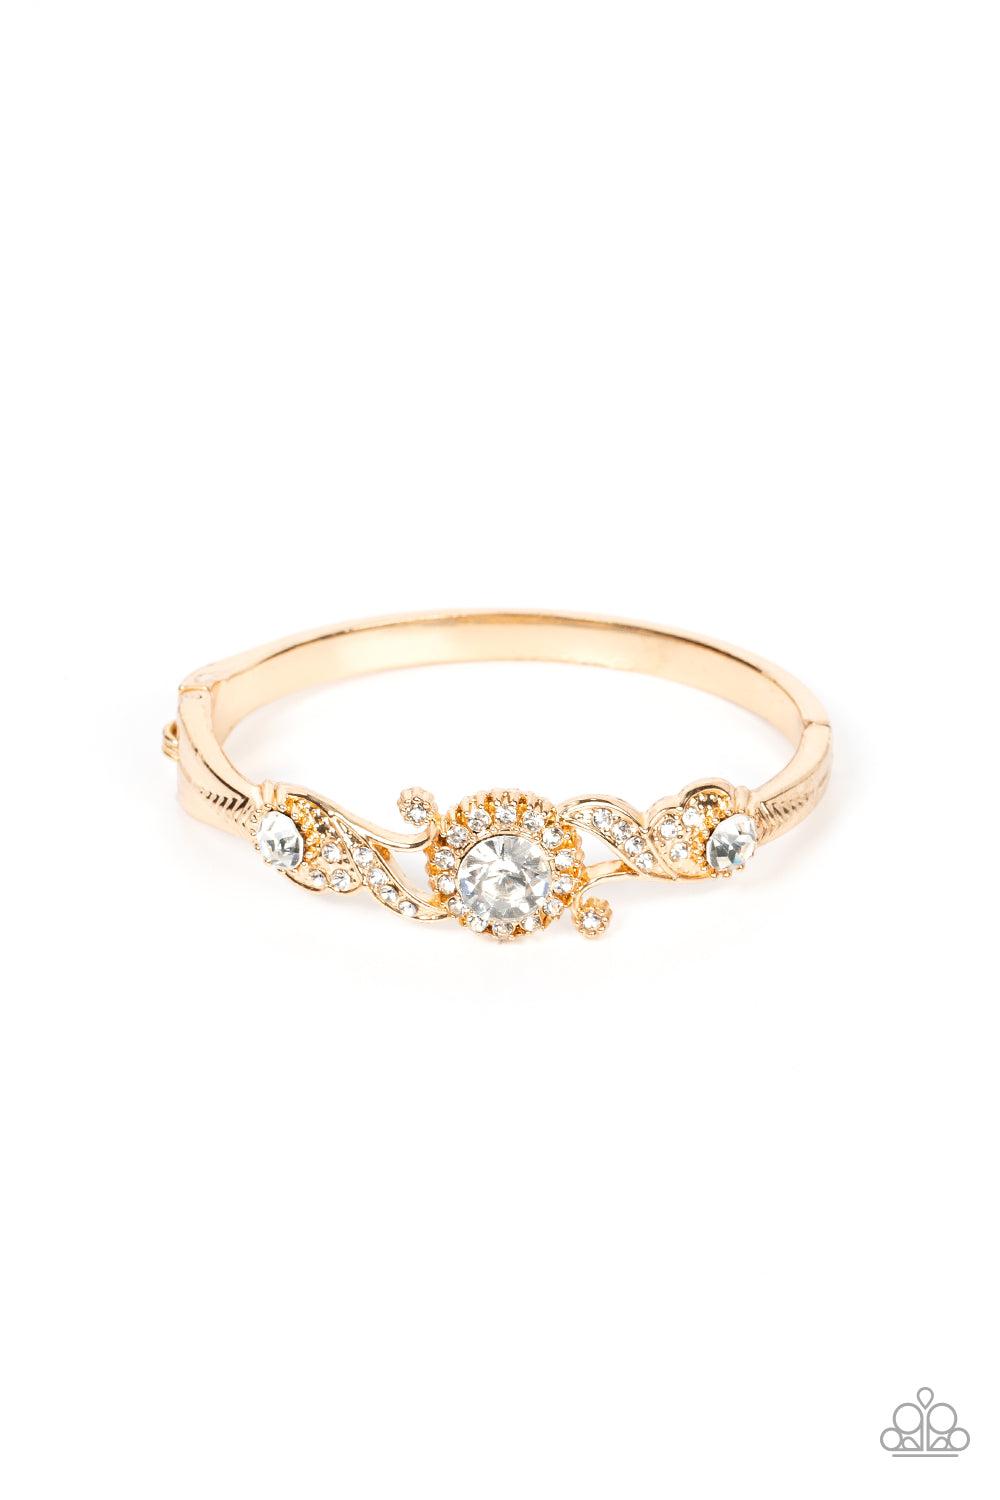 Expert Elegance Gold &amp; White Rhinestone Bracelet - Paparazzi Accessories- lightbox - CarasShop.com - $5 Jewelry by Cara Jewels